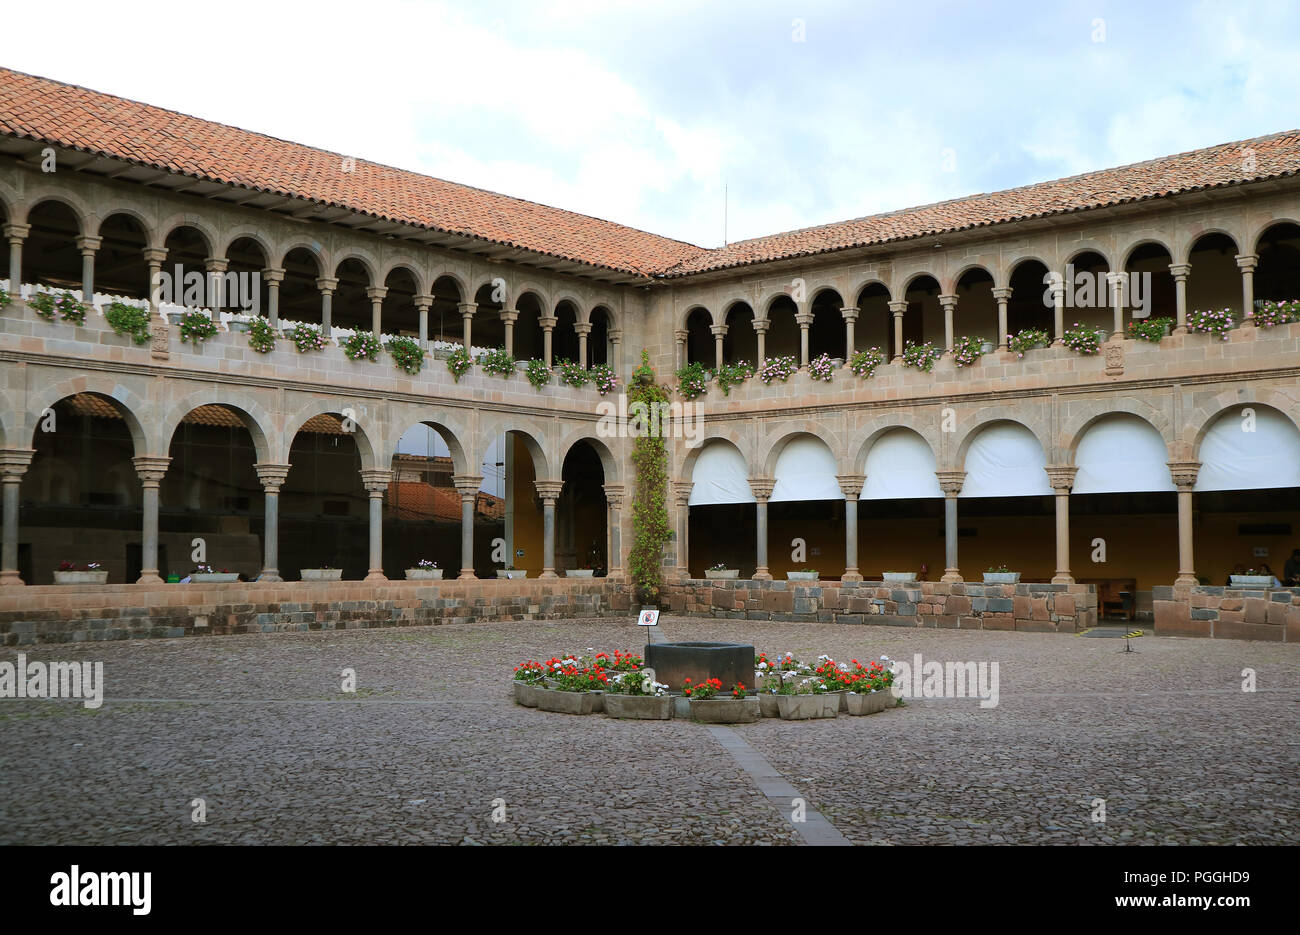 Das Courtyard Santo Domingo Kloster in Qoricancha ARCHÄOLOGISCHE STÄTTE, Cusco, Peru, Südamerika, UNESCO Weltkulturerbe Stockfoto